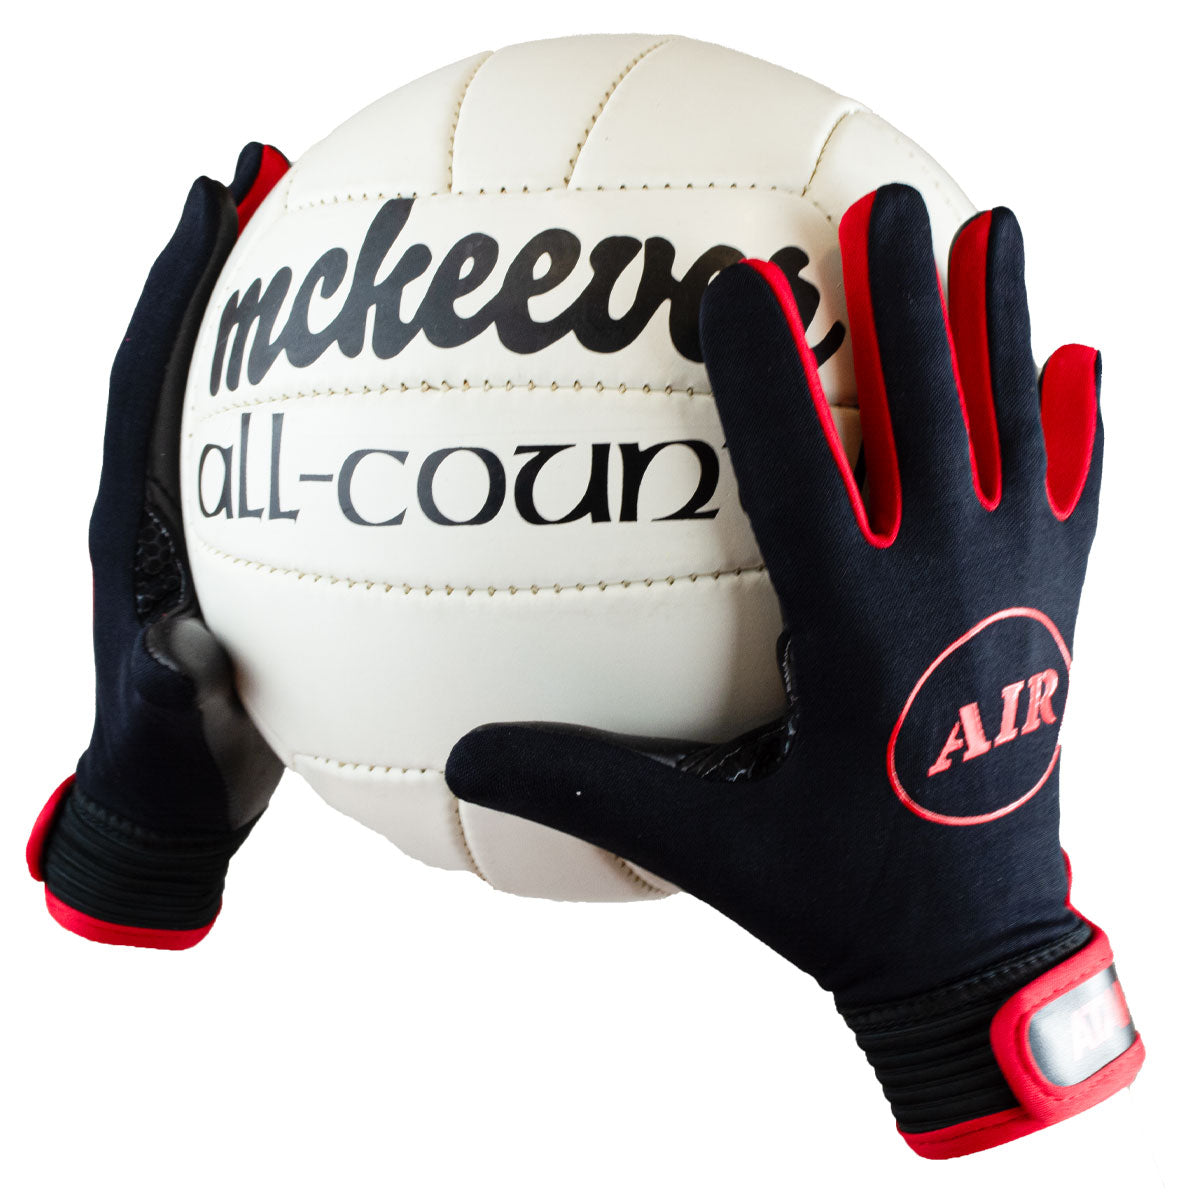 Atak Air Gaelic Gloves - Adult - Red